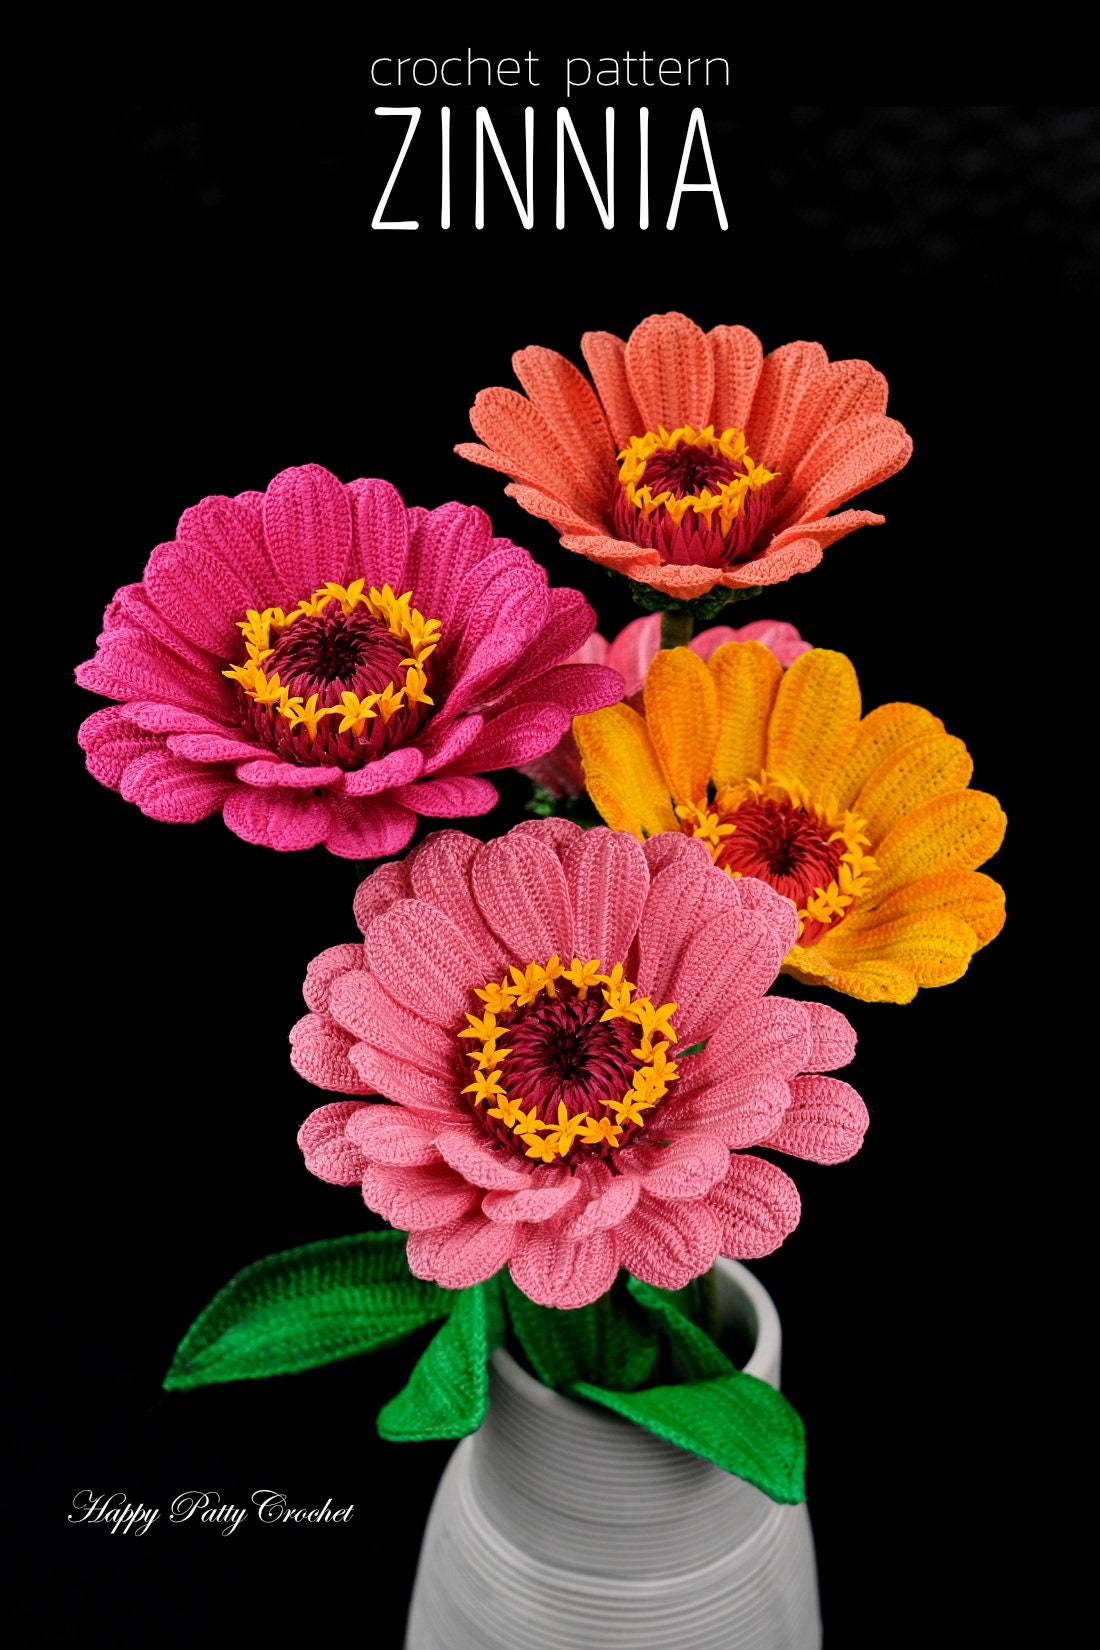 Crochet Pattern for a Zinnia Flower - Flower Pattern for a Crochet Zinnia Flower